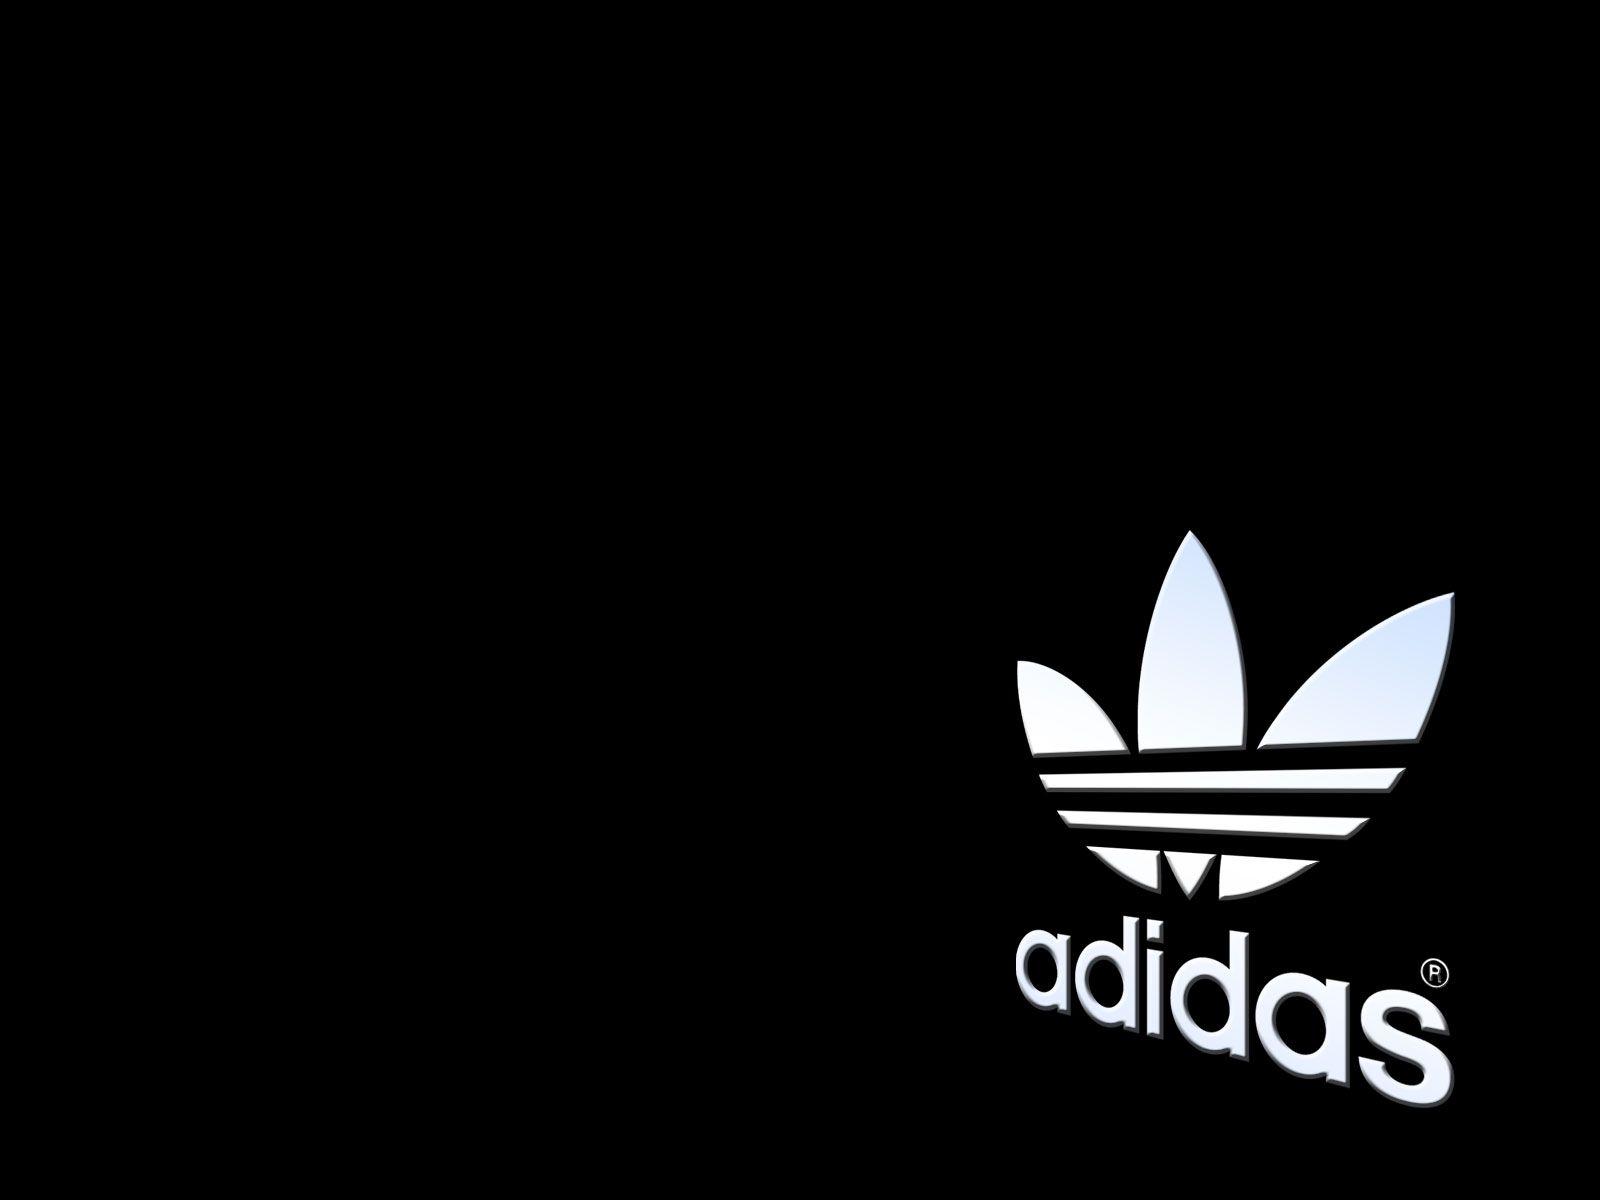 Adidas Soccer Logo - Adidas Soccer Wallpapers - Wallpaper Cave